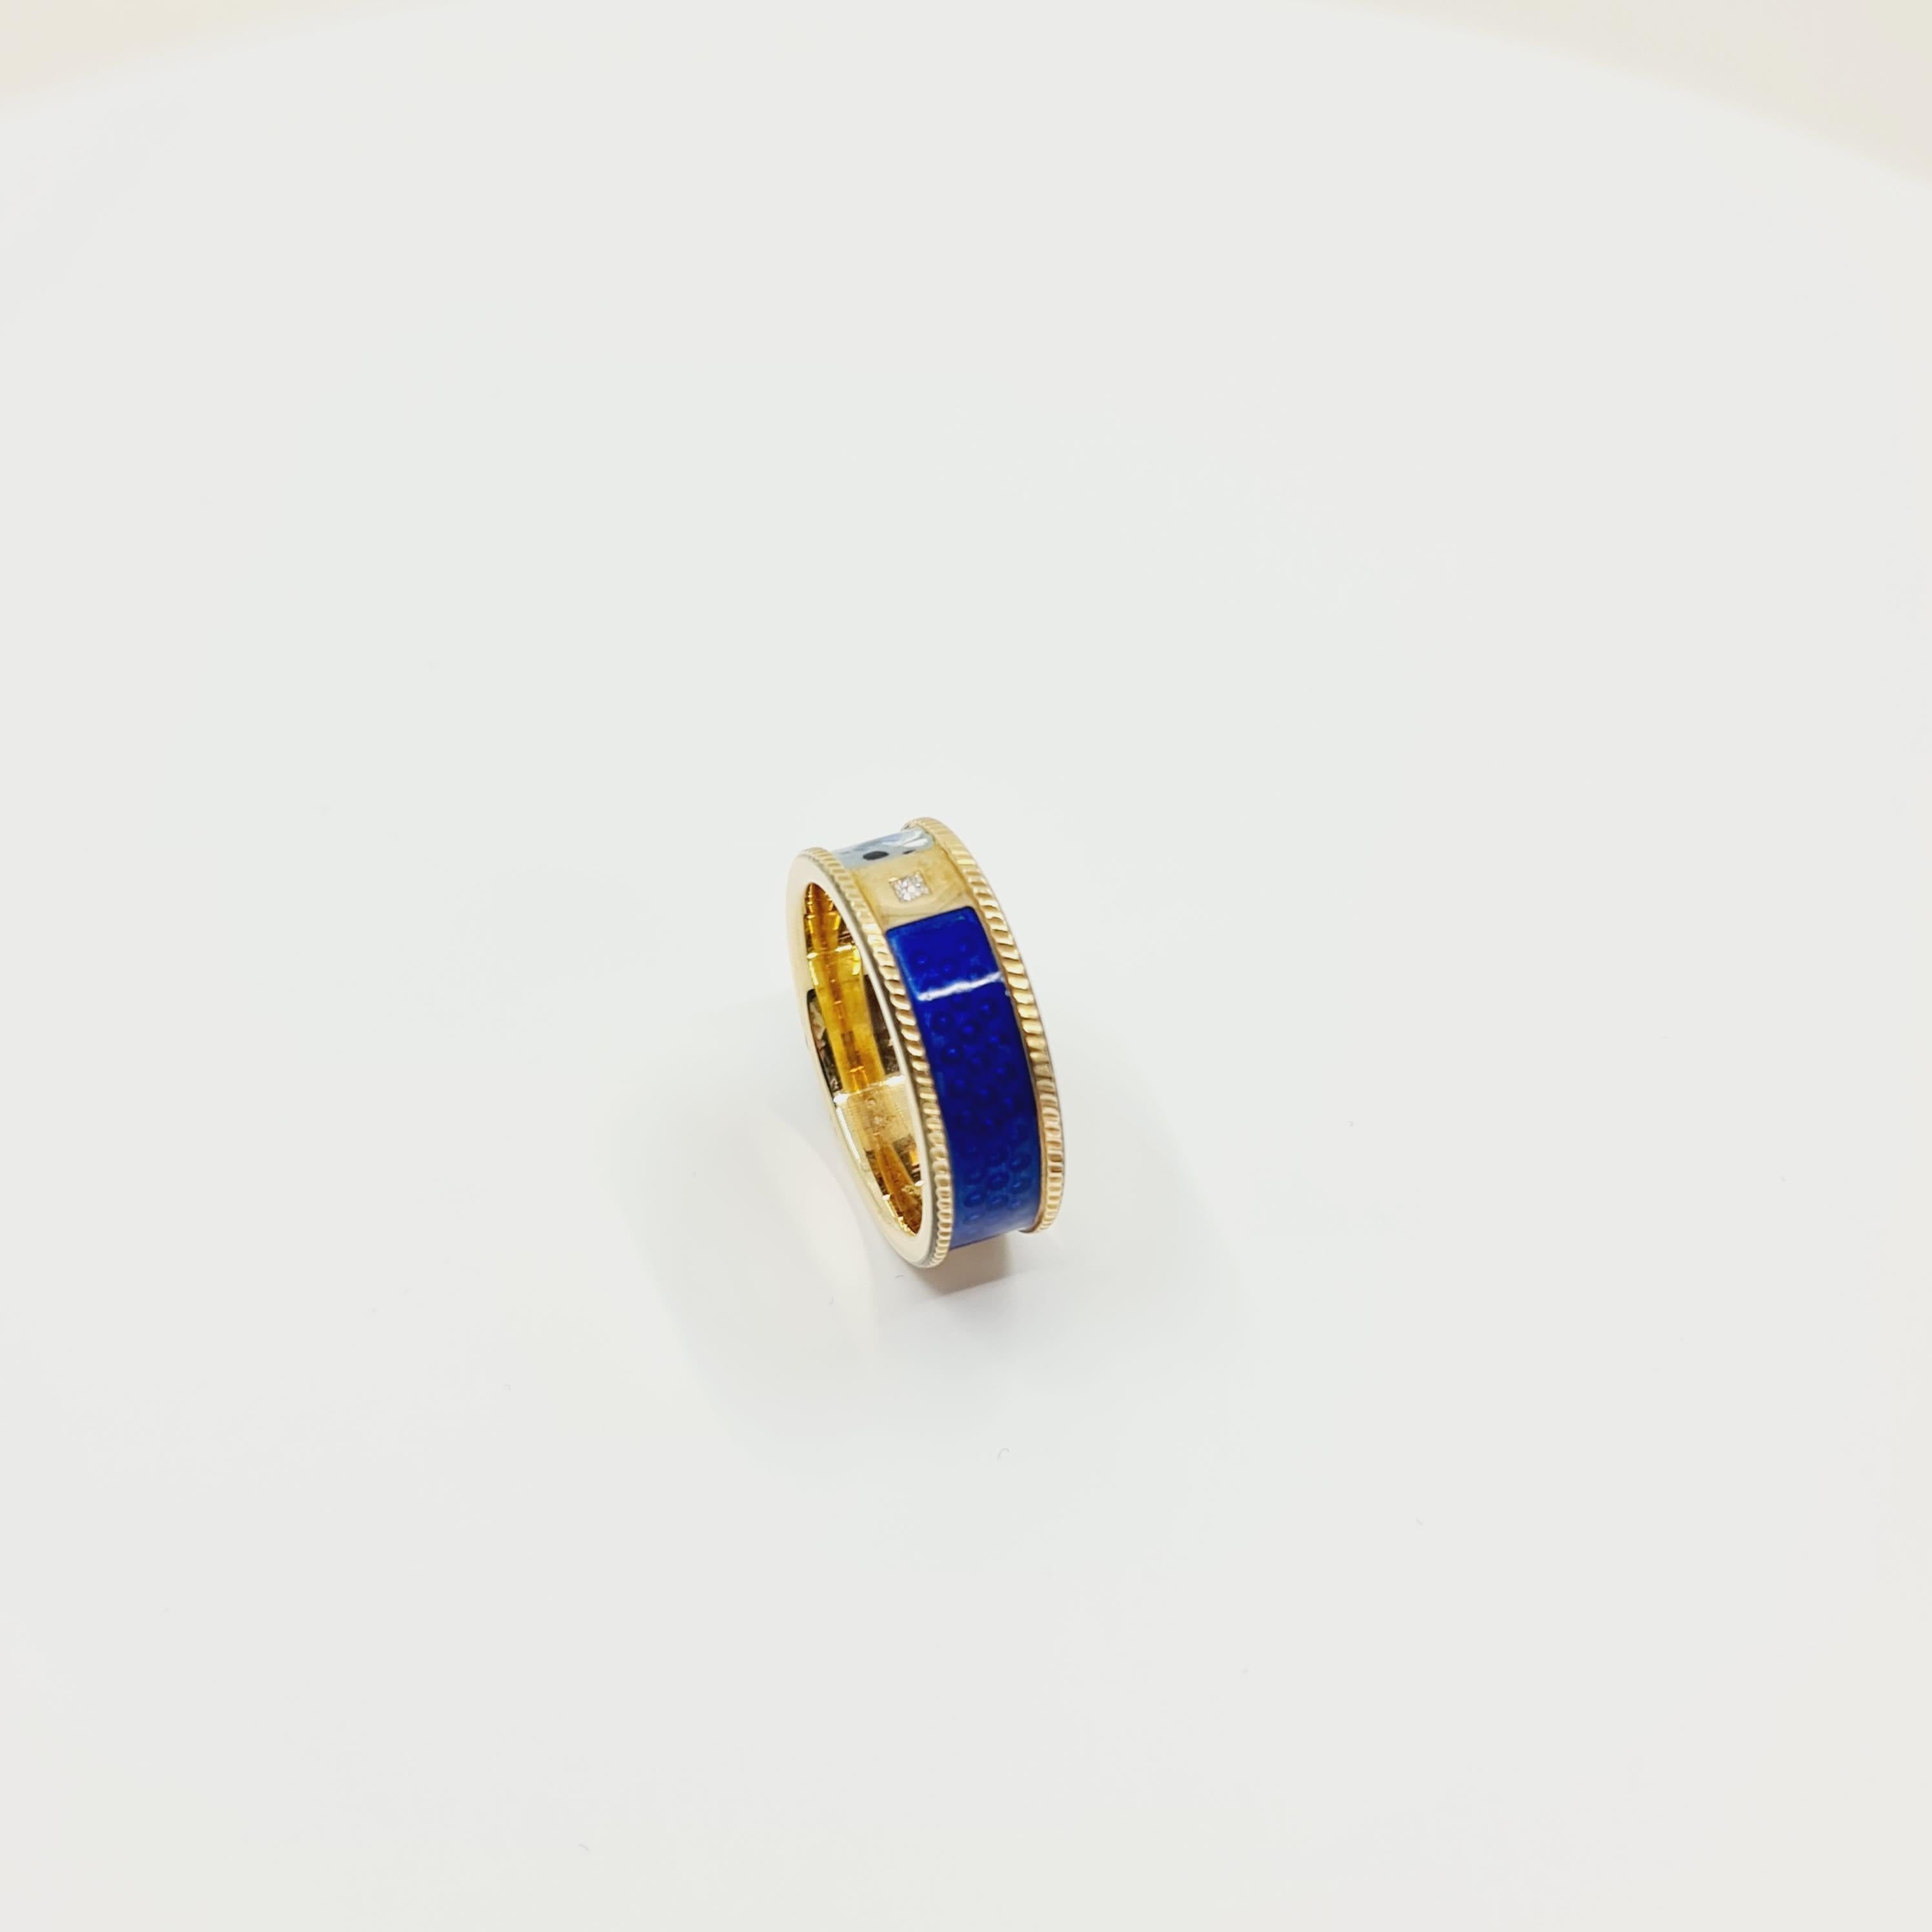 0.05 Carat Princess Cut Diamond Ring G/IF 14k Gold, Blue/Grey/White Enamel For Sale 1